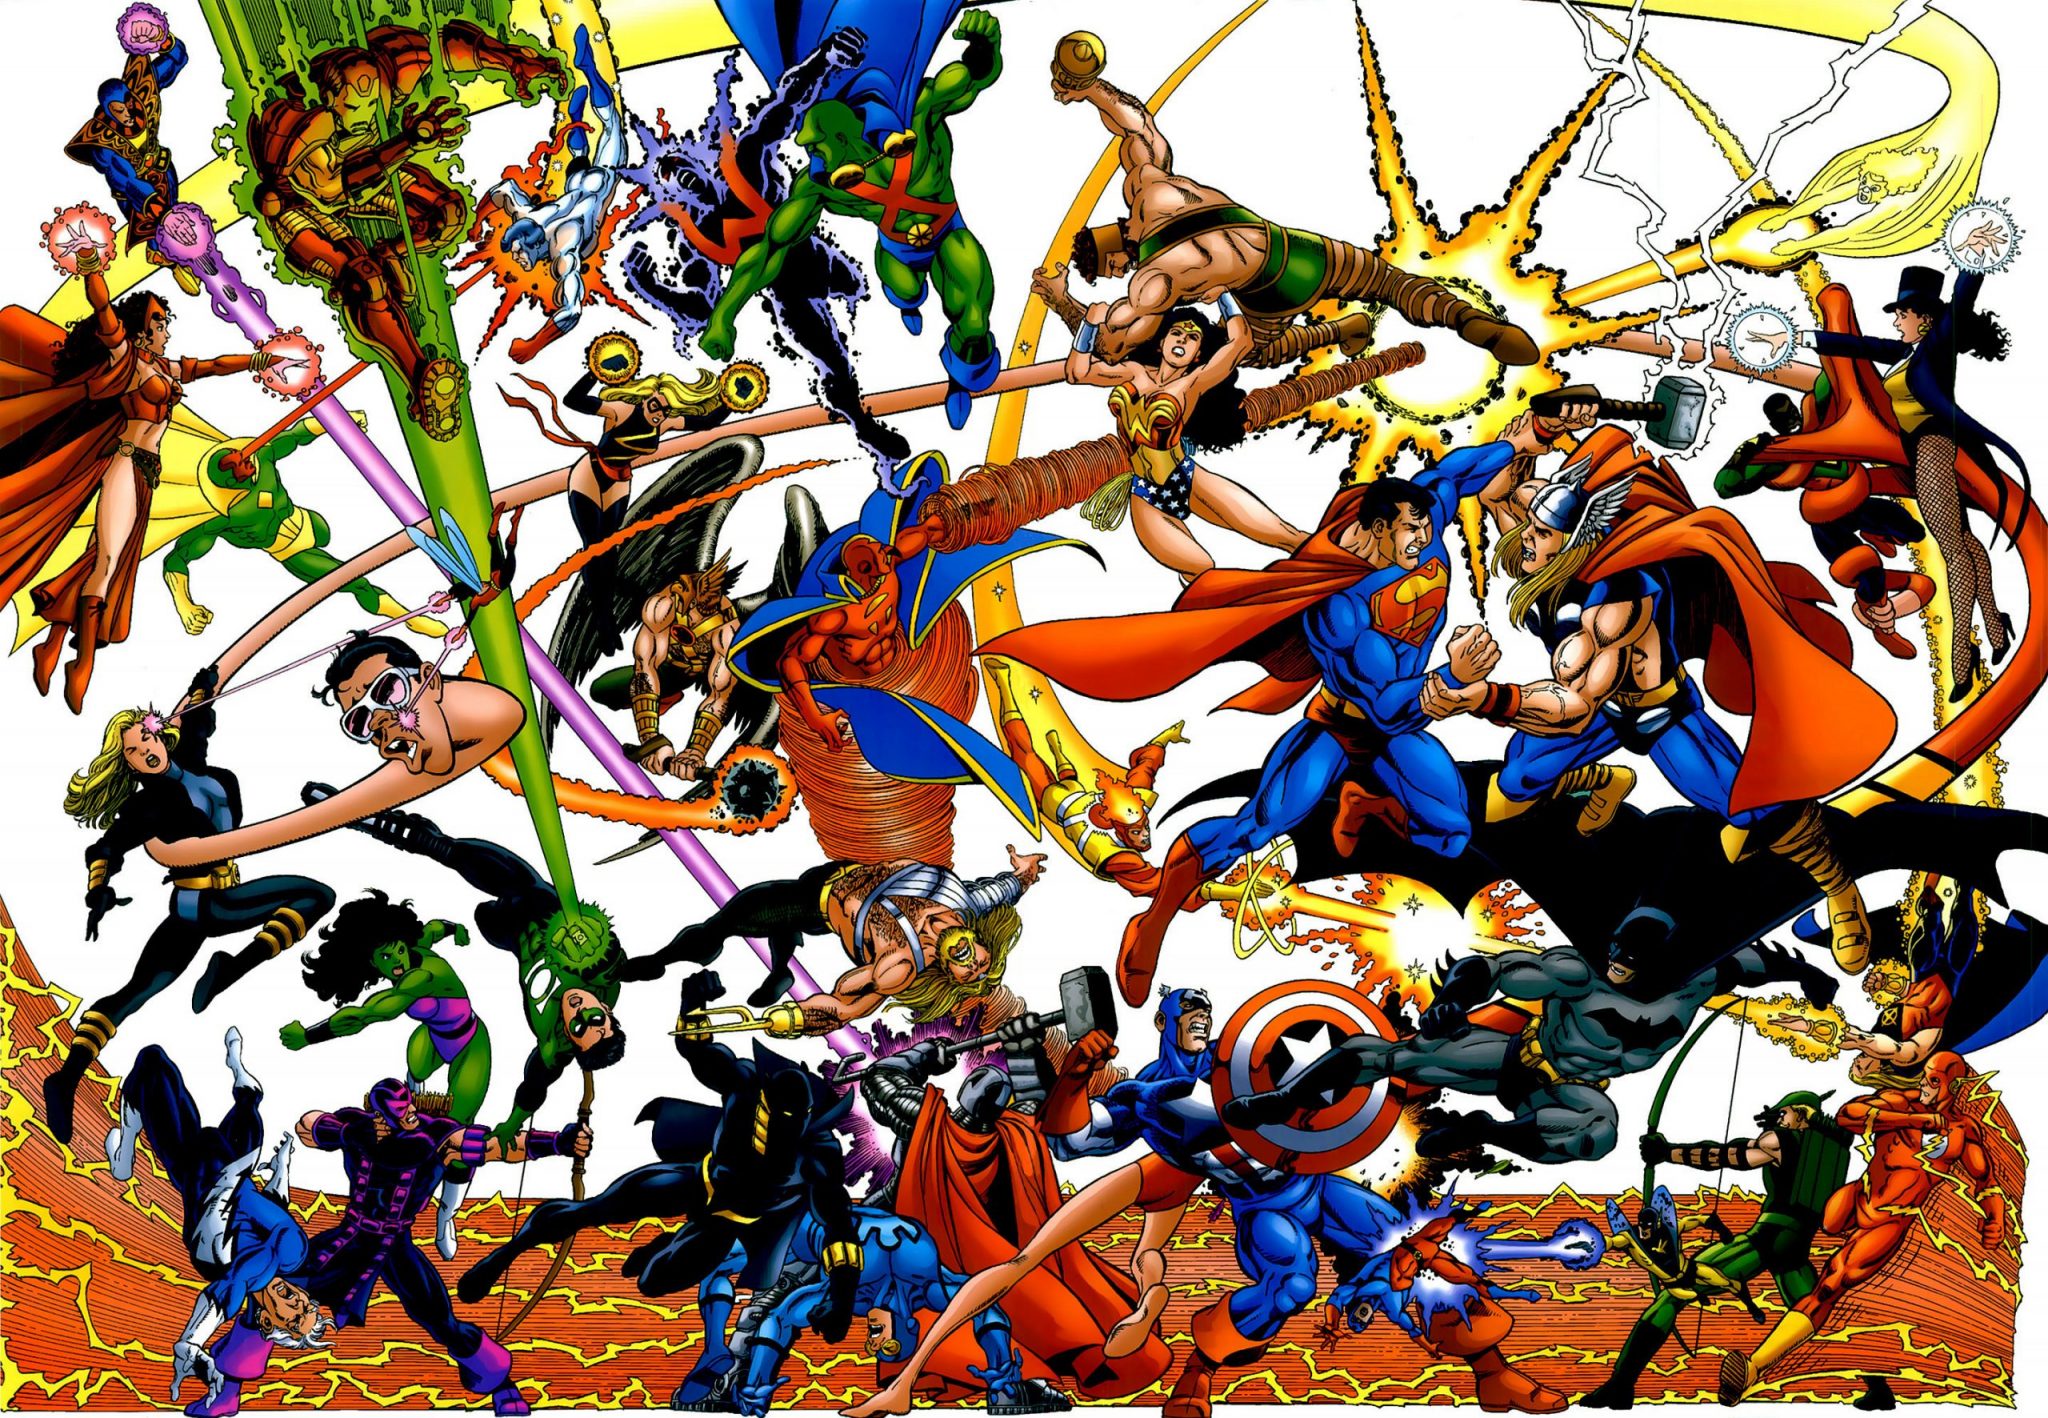 Source: JLA/Avengers Vol.1 #2 "A Contest of Champions!" 